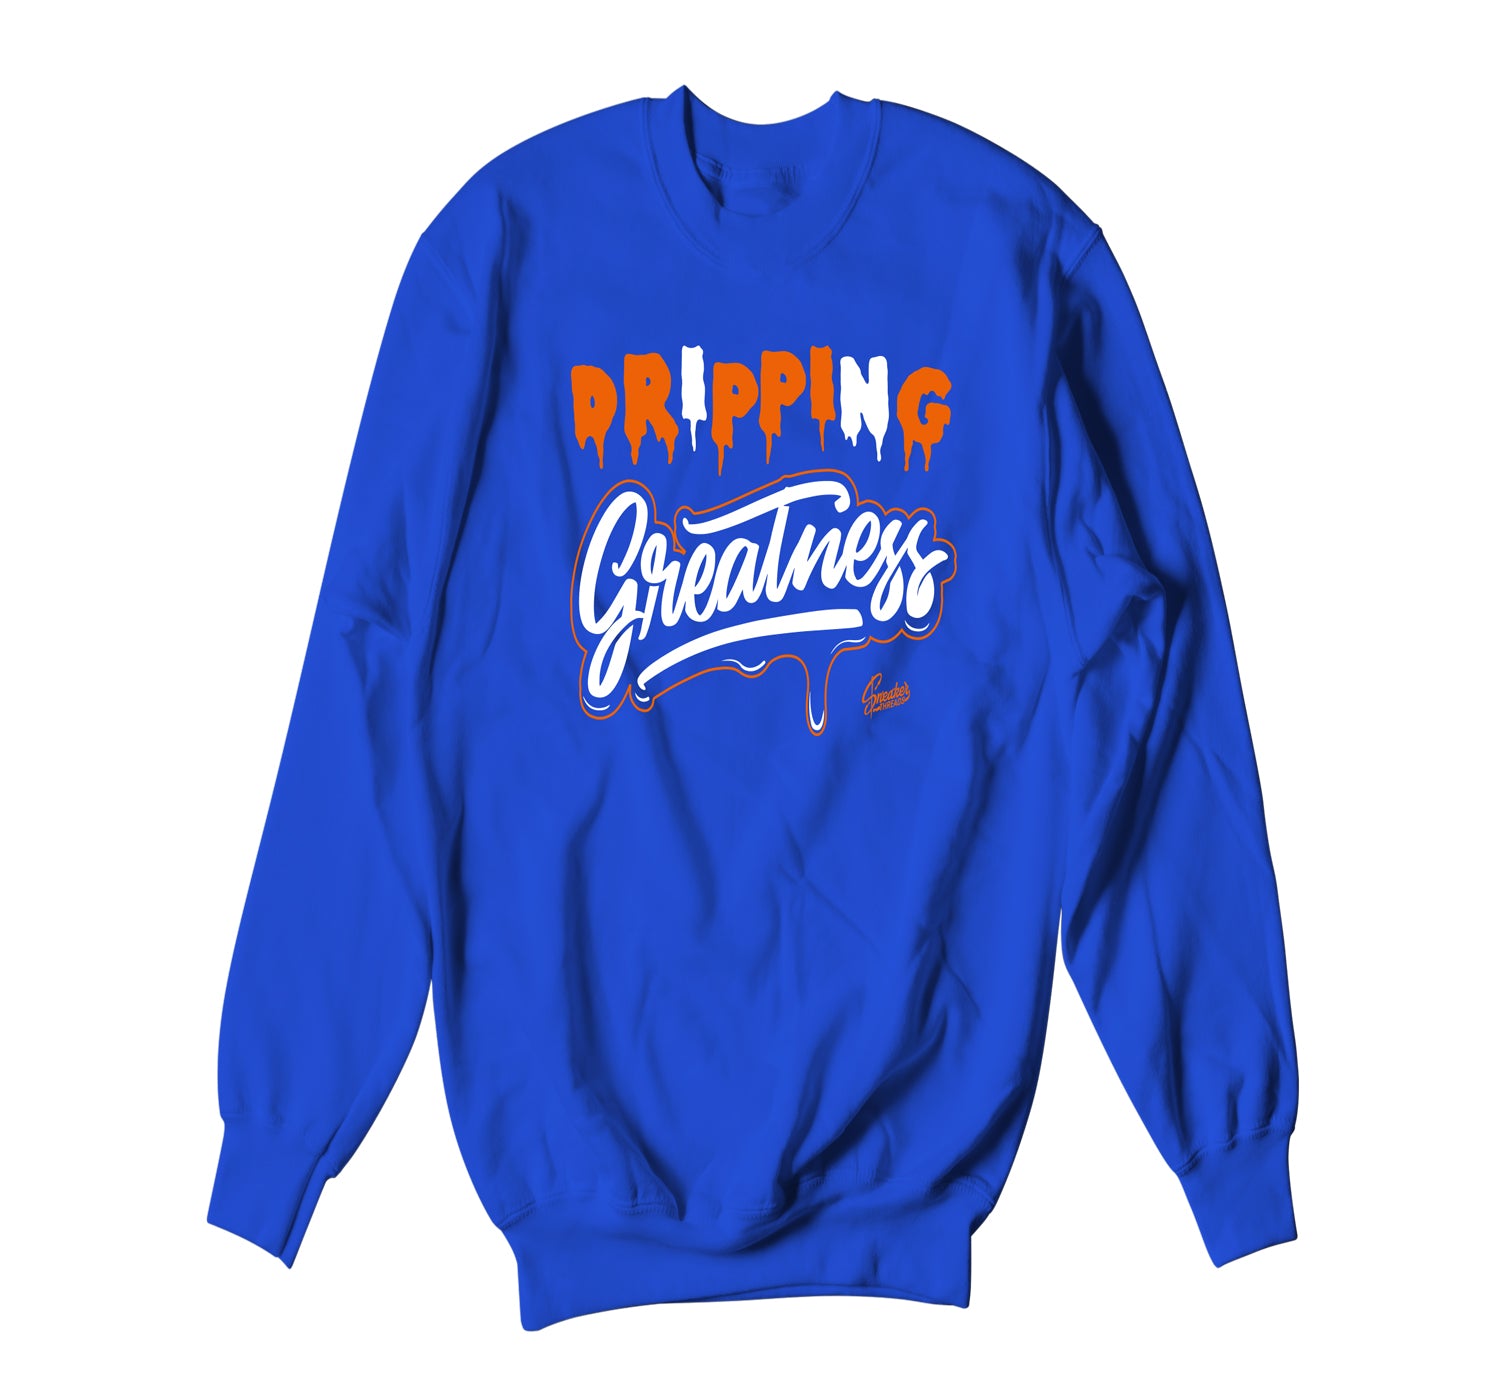 Retro 3 Knicks Sweater - Dripping Greatness - Blue